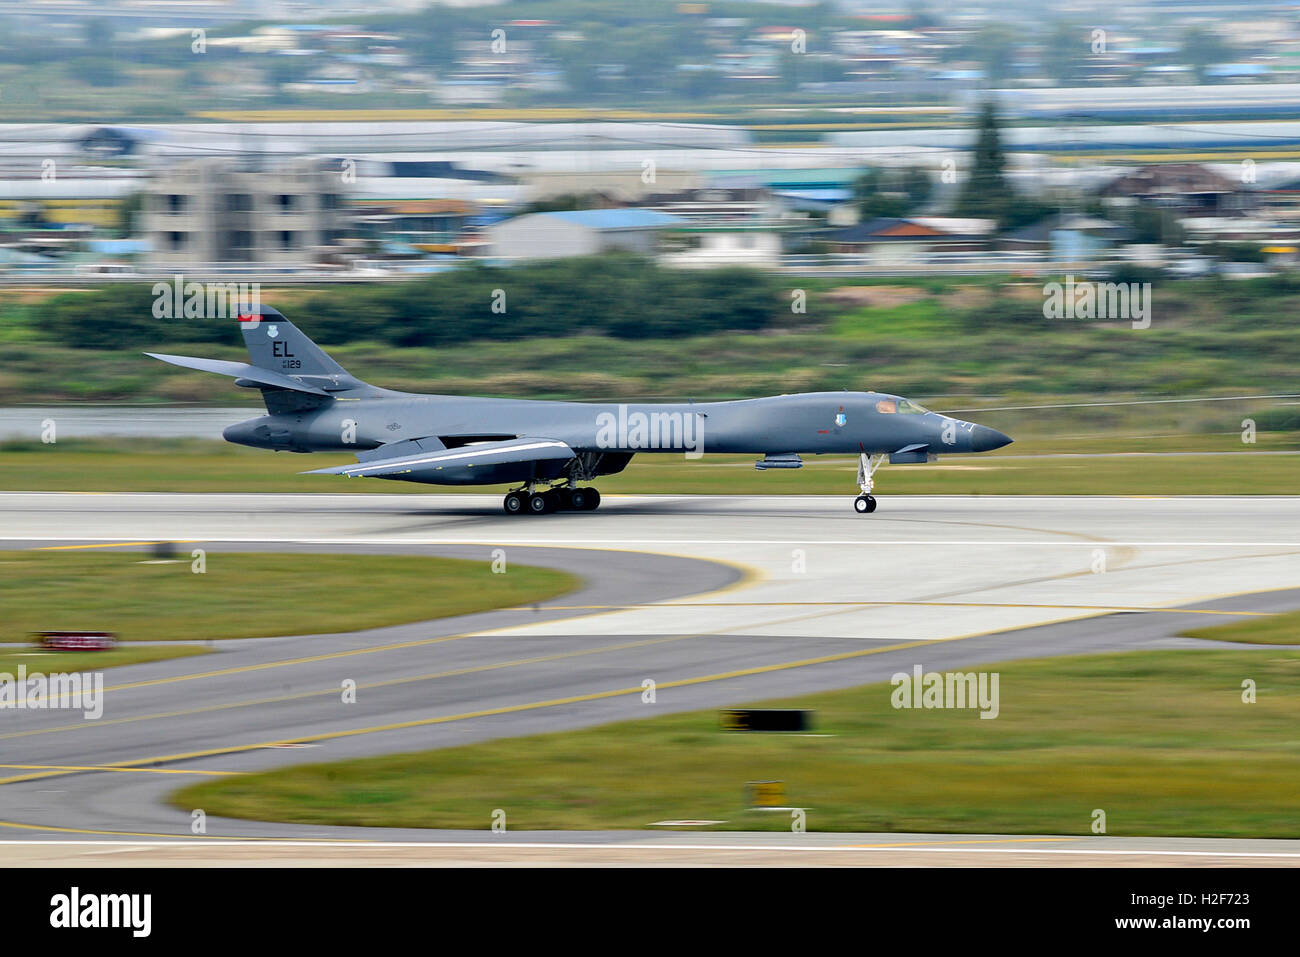 A U.S. Air Force B-1B Lancer aircraft lands at Osan Air Force Base September 21, 2016 in Osan, South Korea. Stock Photo